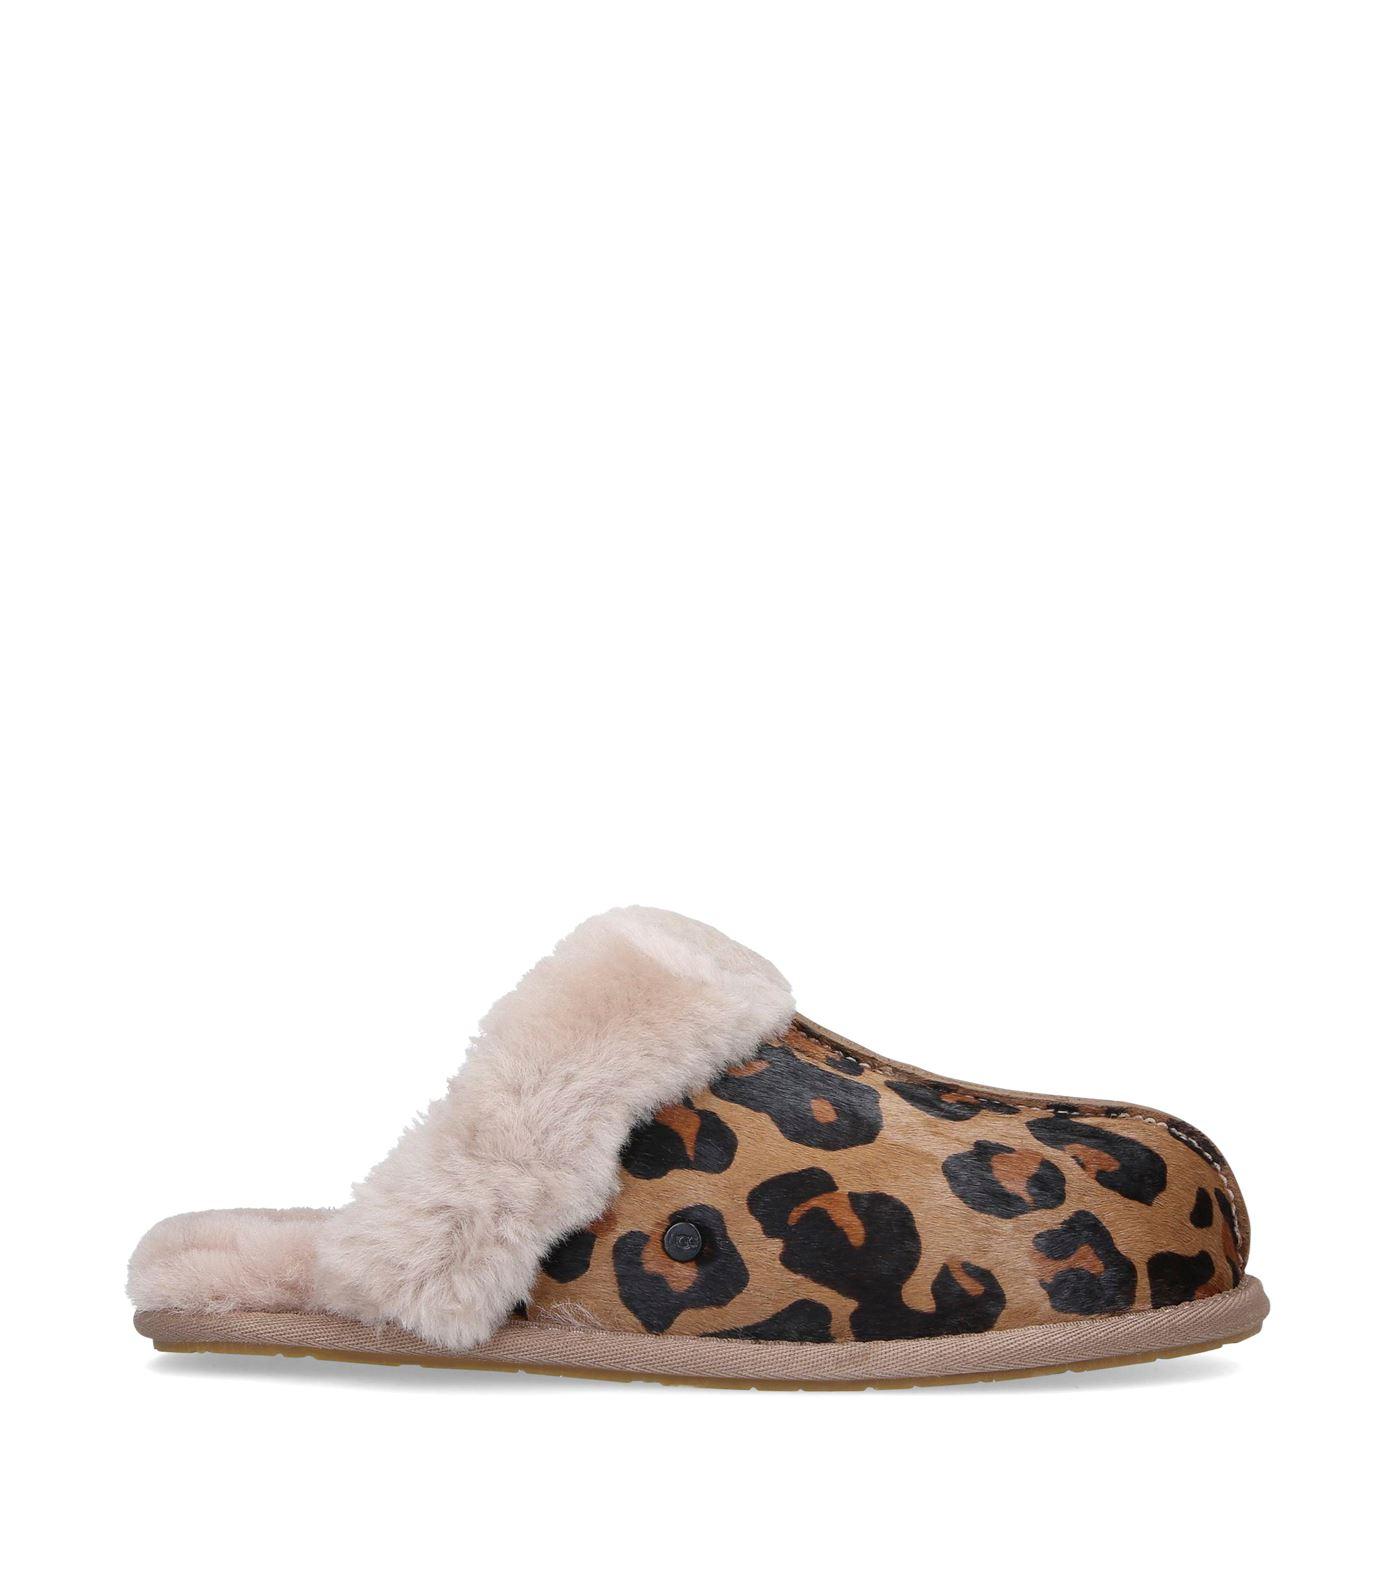 UGG Synthetic Scuffette Ii Leopard Slippers in Tan (Brown) - Lyst